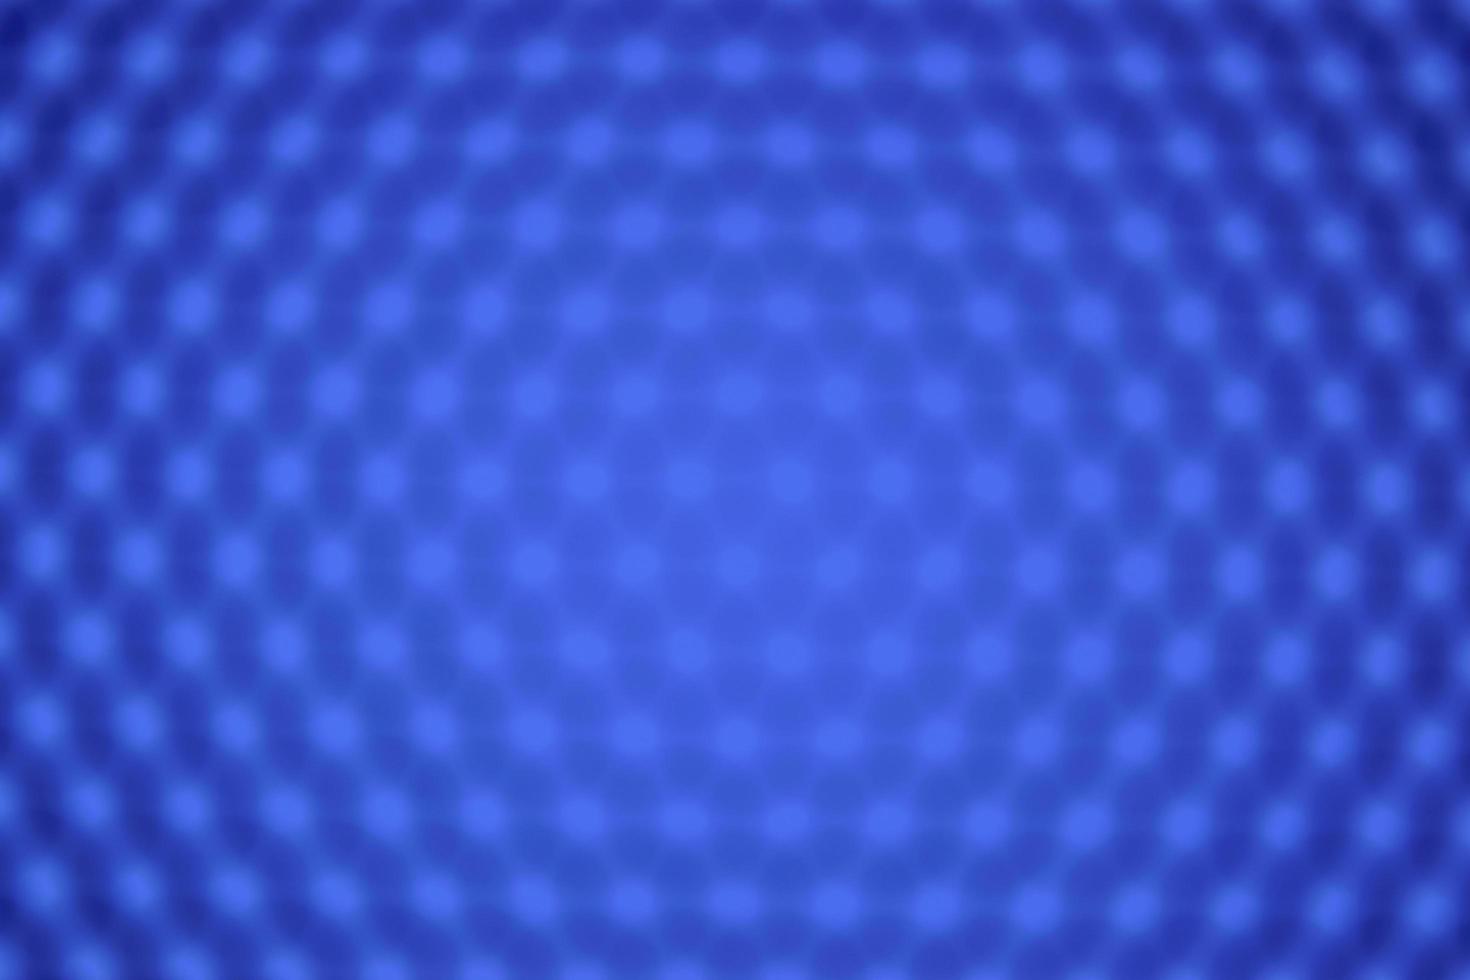 panel av suddig blå ledbelysning foto